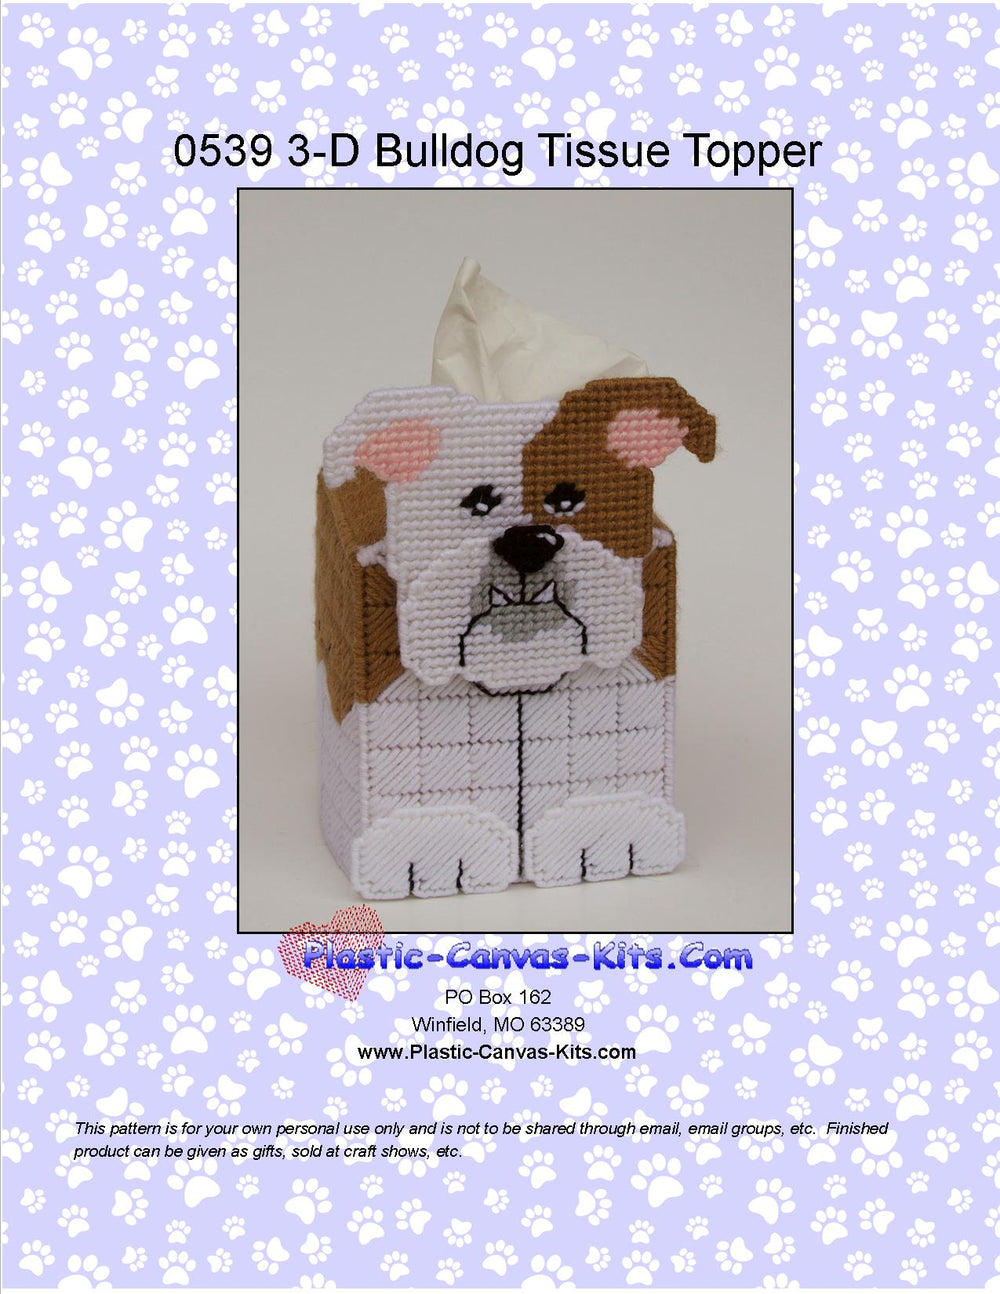 Old English Bulldog 3-D Tissue Topper